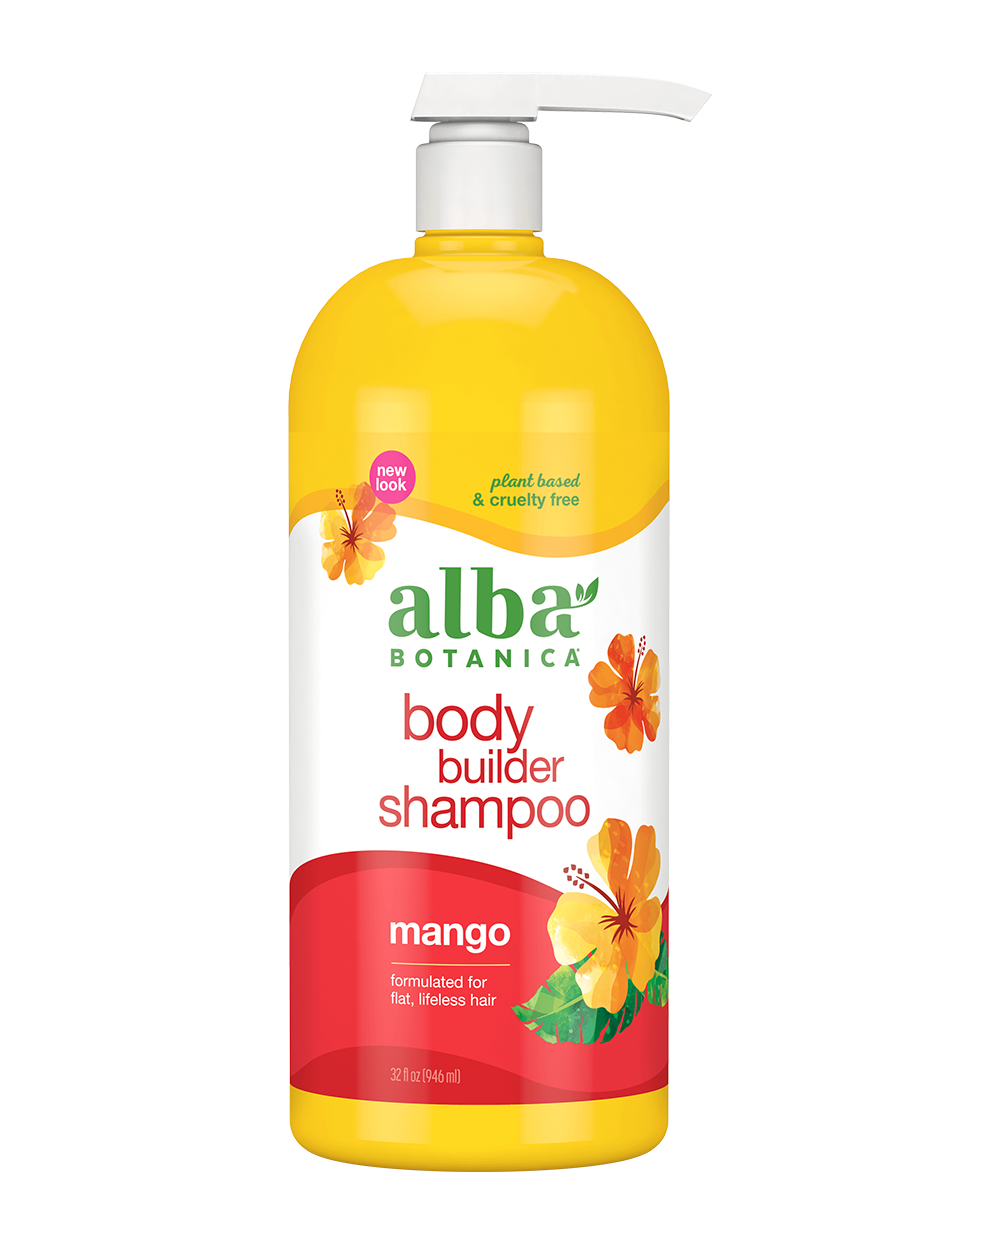 body builder shampoo mango